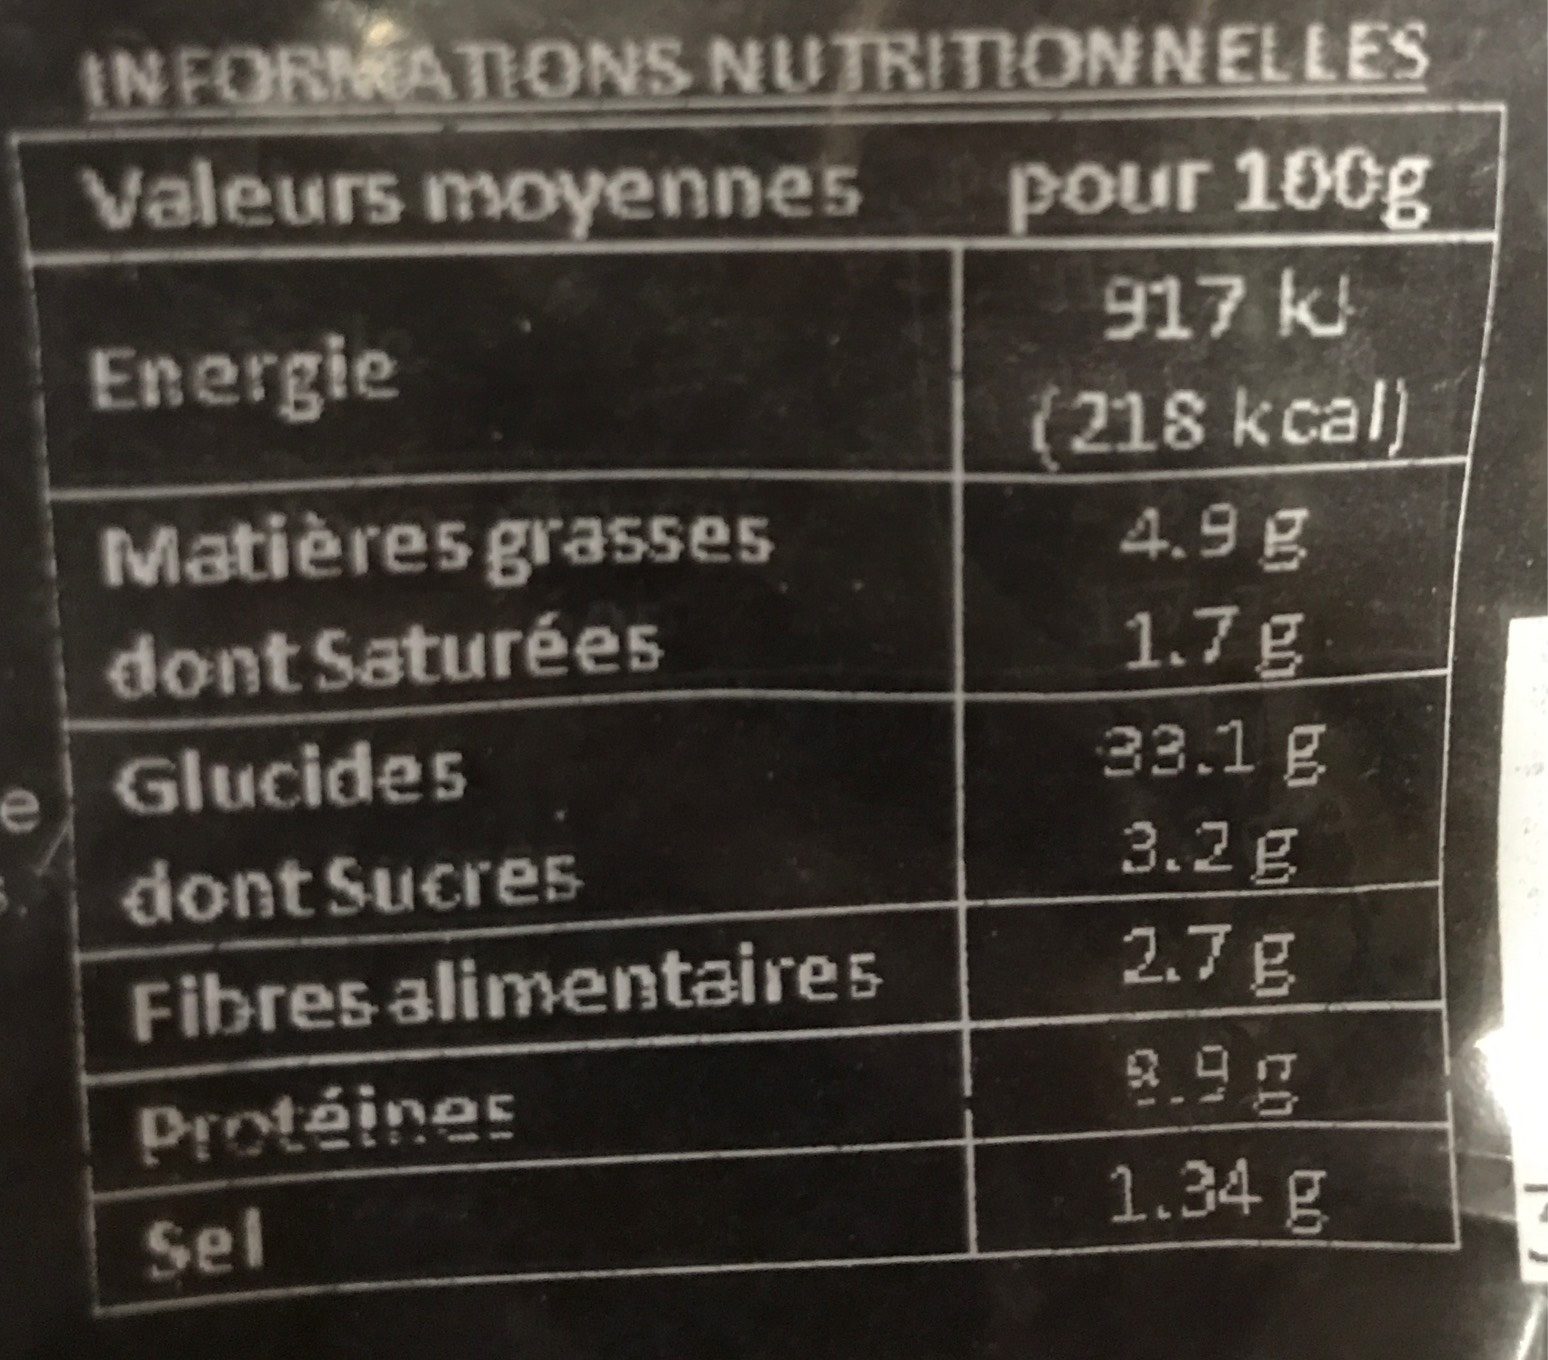 Piperade au chorizo - Nutrition facts - fr